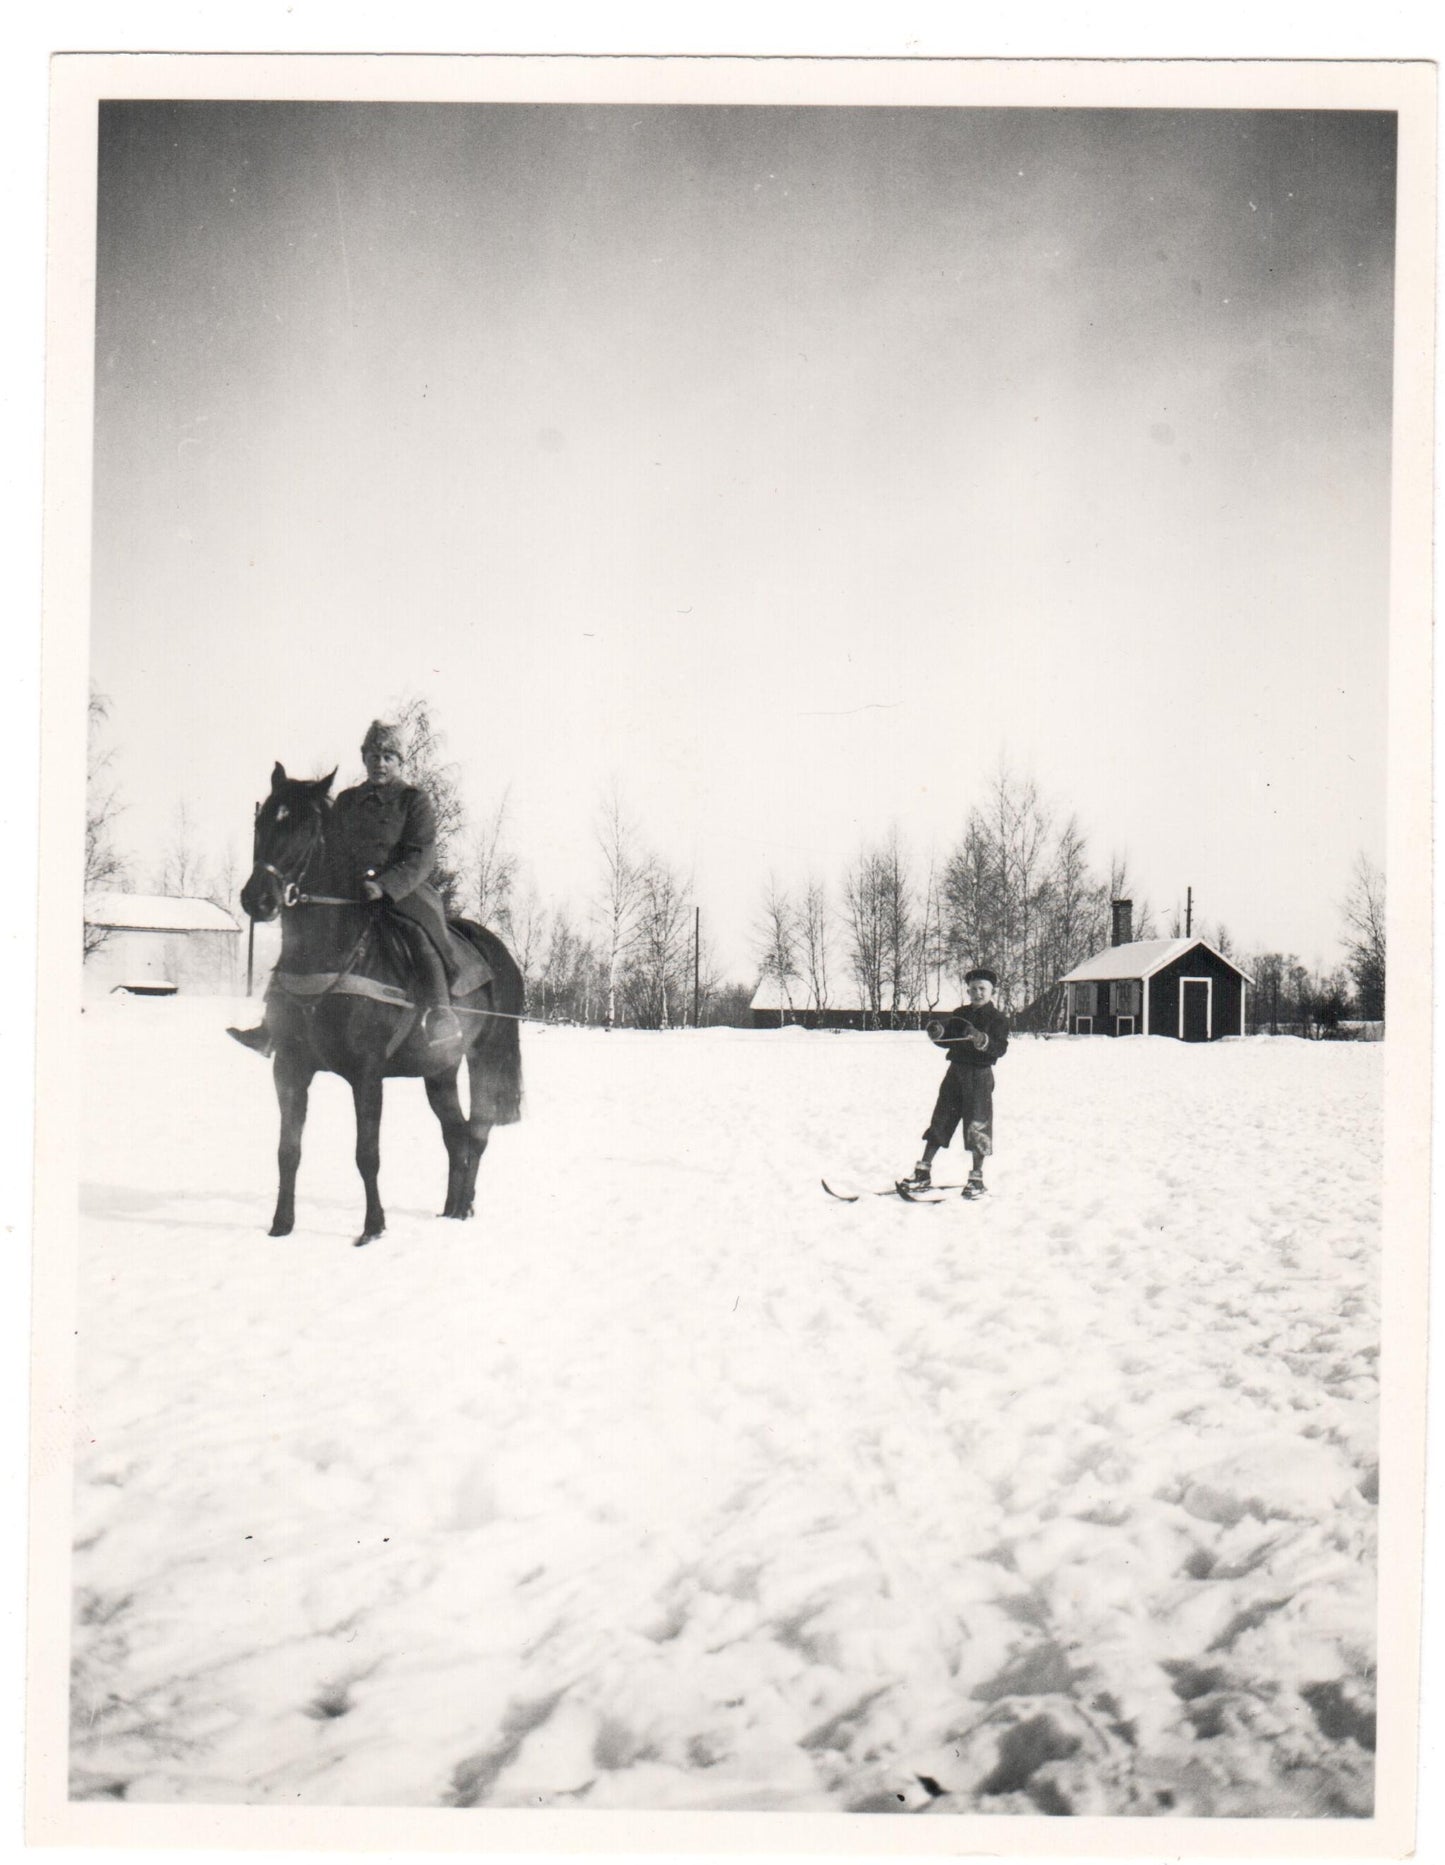 Vintage Photography - Winter Landscape - Portrait of a Man on a Horse - Europe